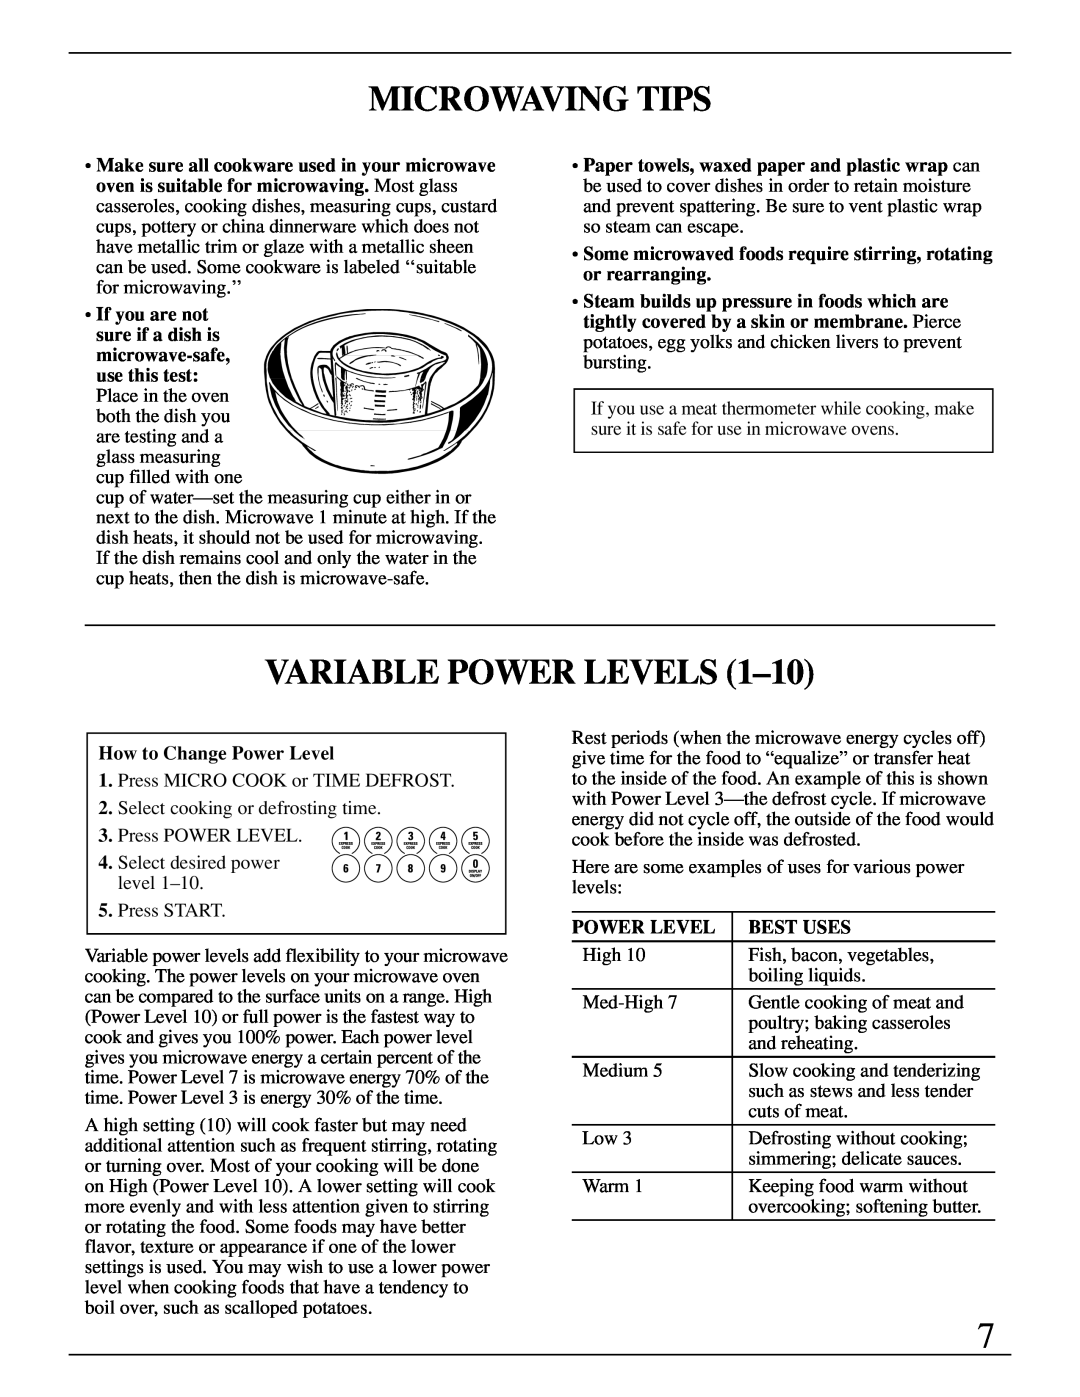 GE Monogram ZMC1095 owner manual Microwaving Tips, Variable Power Levels 